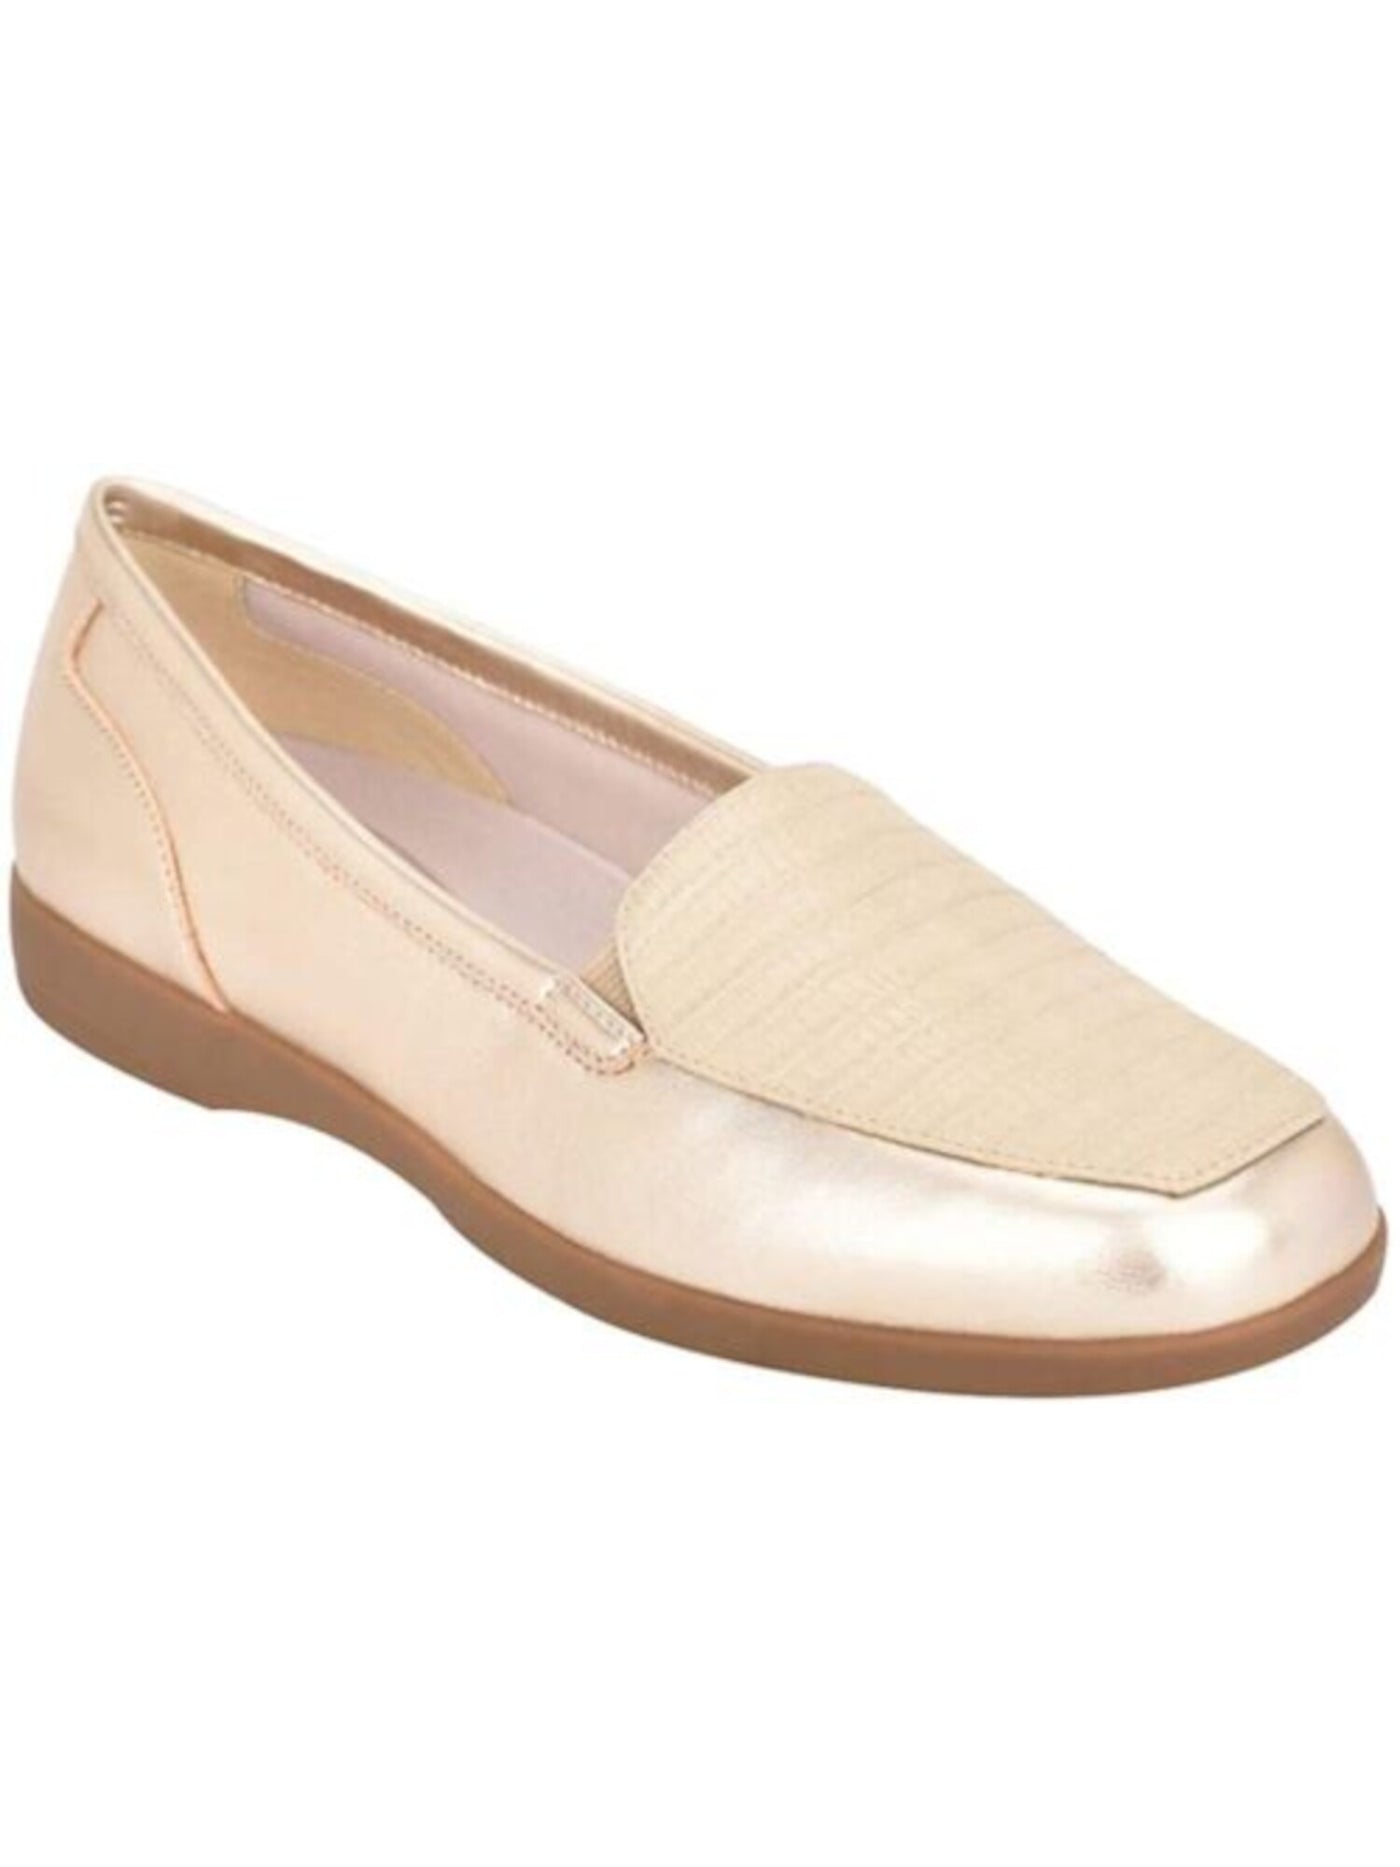 EASY SPIRIT Womens Gold Flex Gore Cushioned Comfort Devitt Round Toe Wedge Slip On Loafers Shoes 10 M